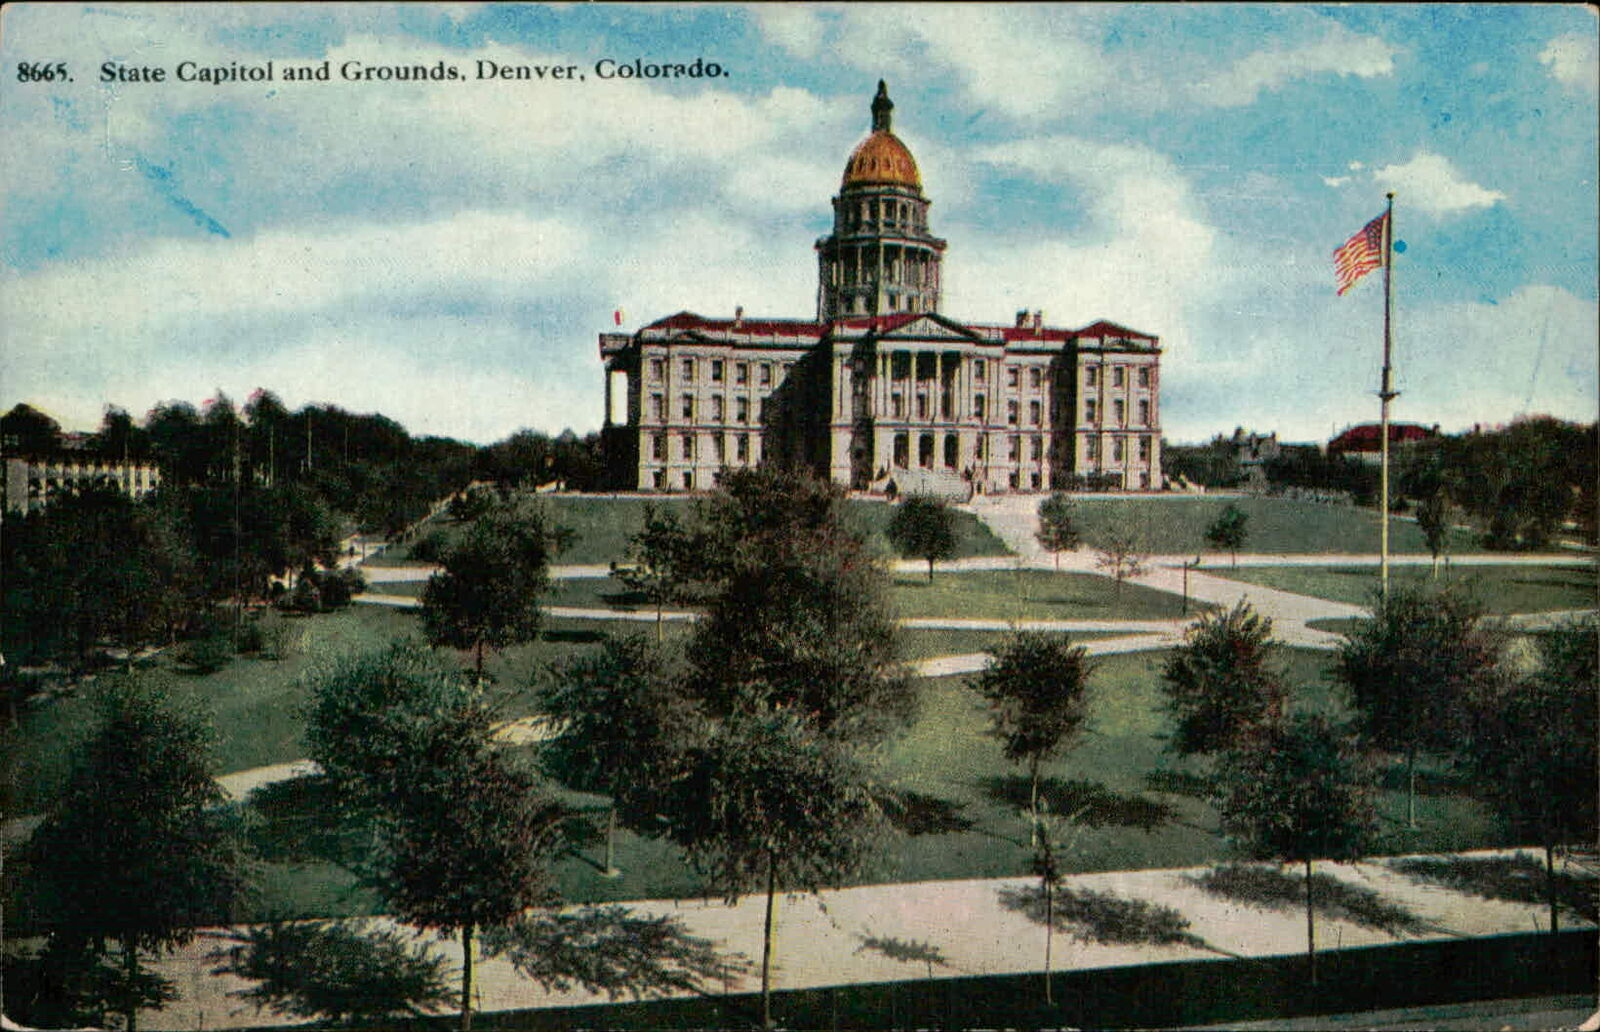 Postcard: 8665. State Capitol and Grounds, Denver, Colorado.